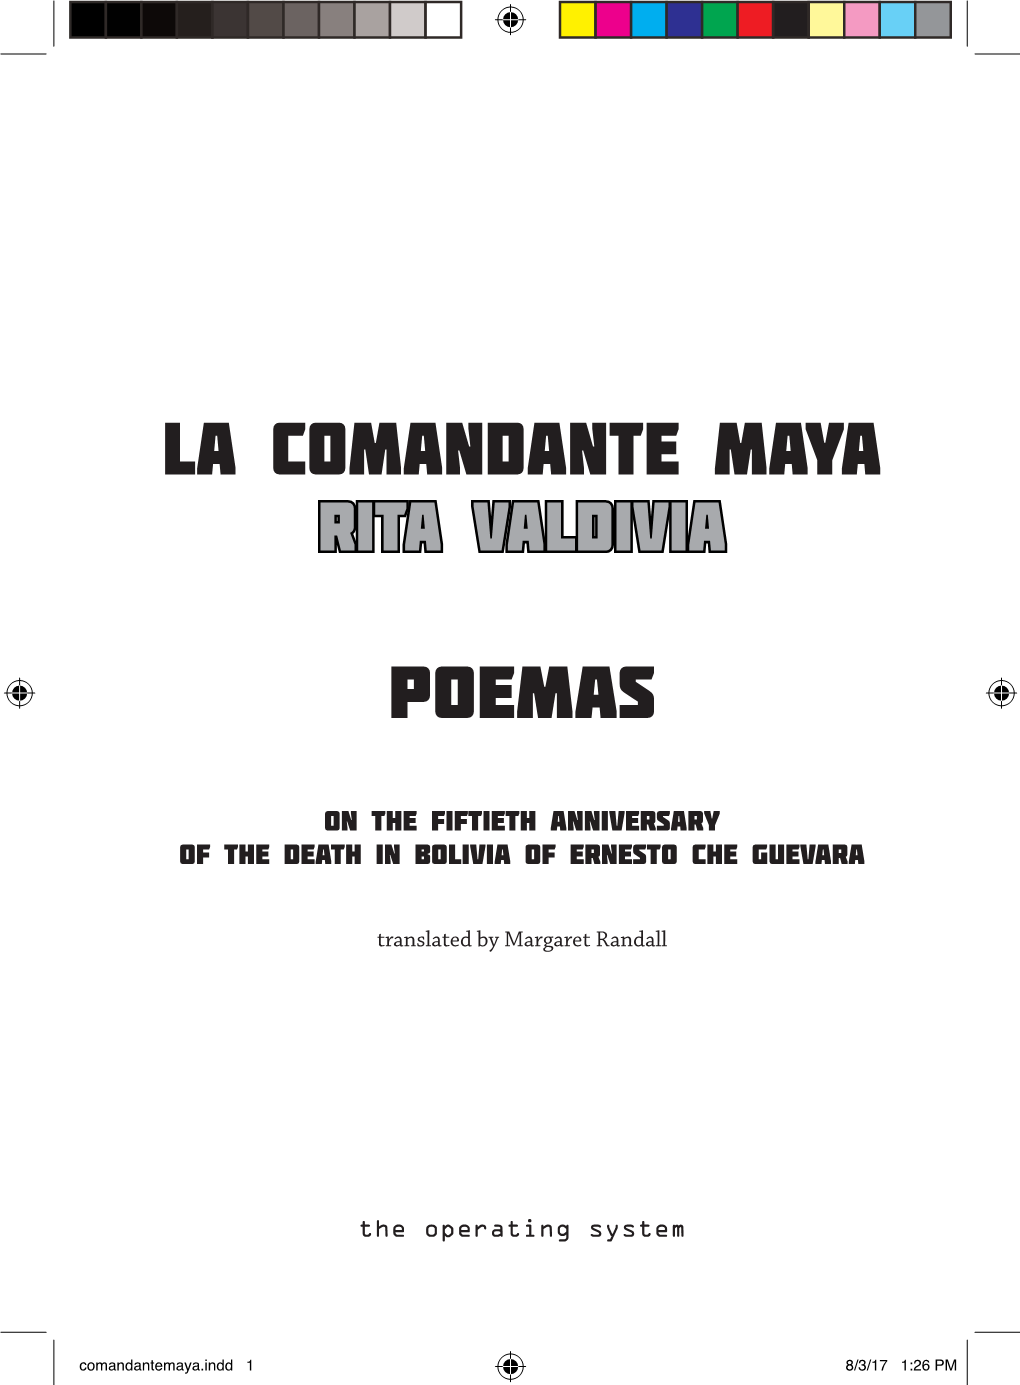 La Comandante Maya Poemas